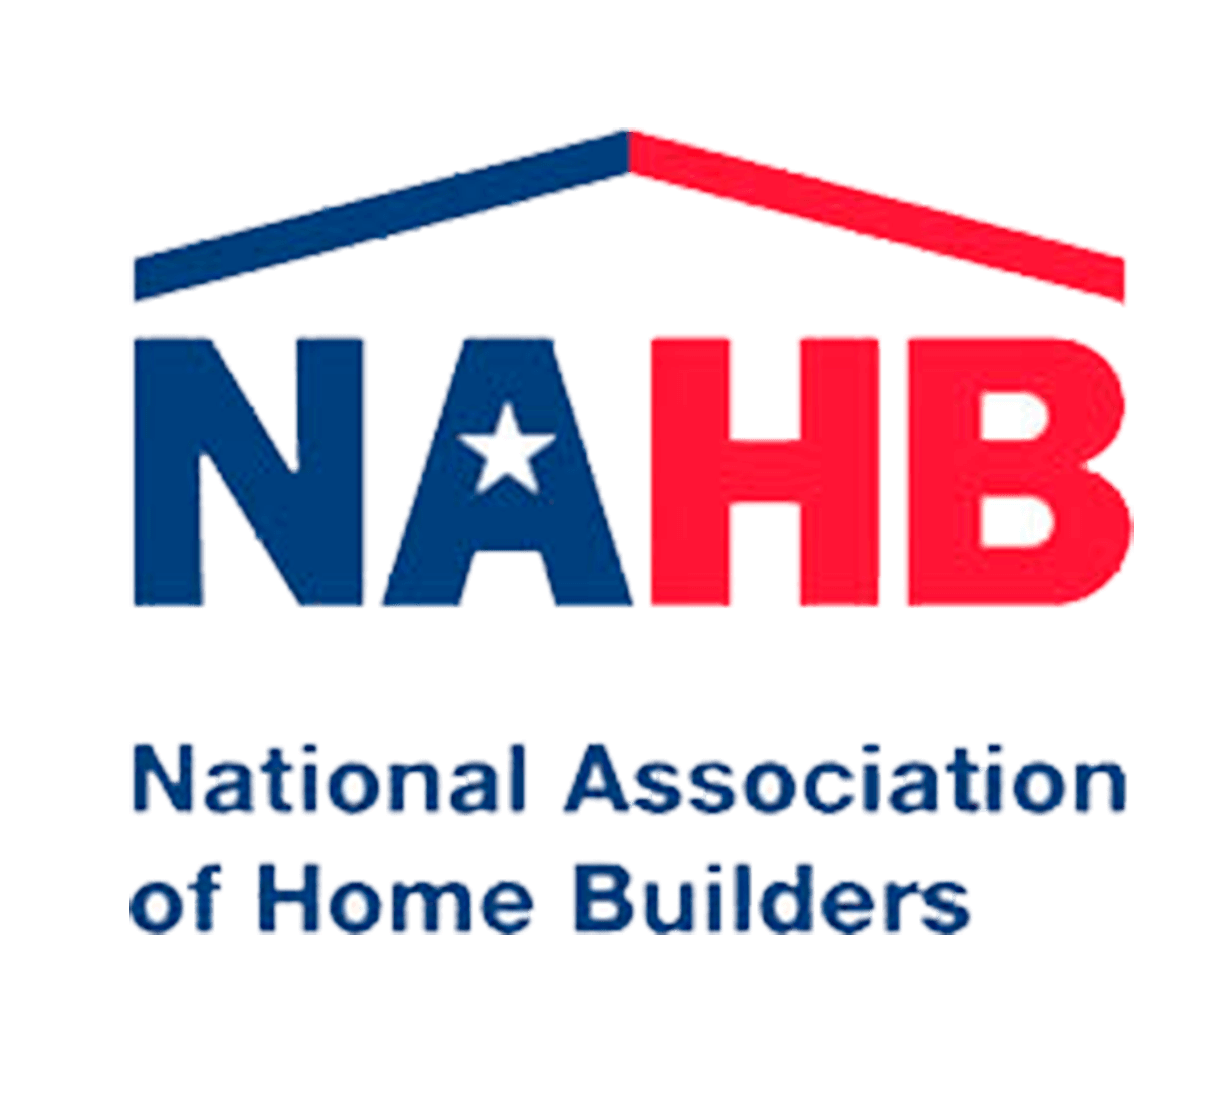 National Association of Home Builders logo